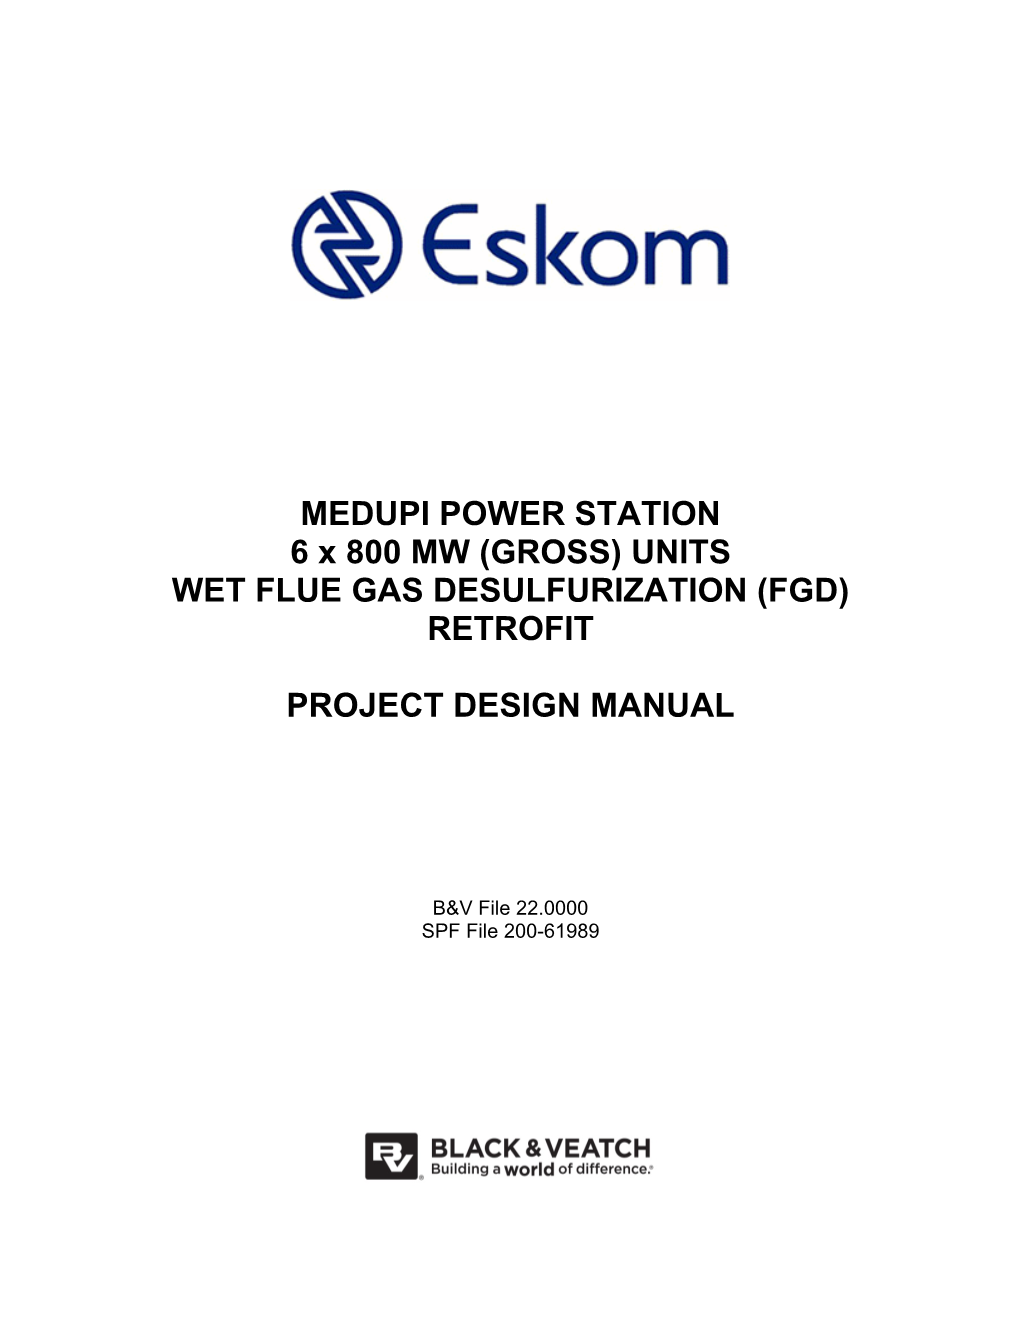 MEDUPI POWER STATION 6 X 800 MW (GROSS) UNITS WET FLUE GAS DESULFURIZATION (FGD) RETROFIT